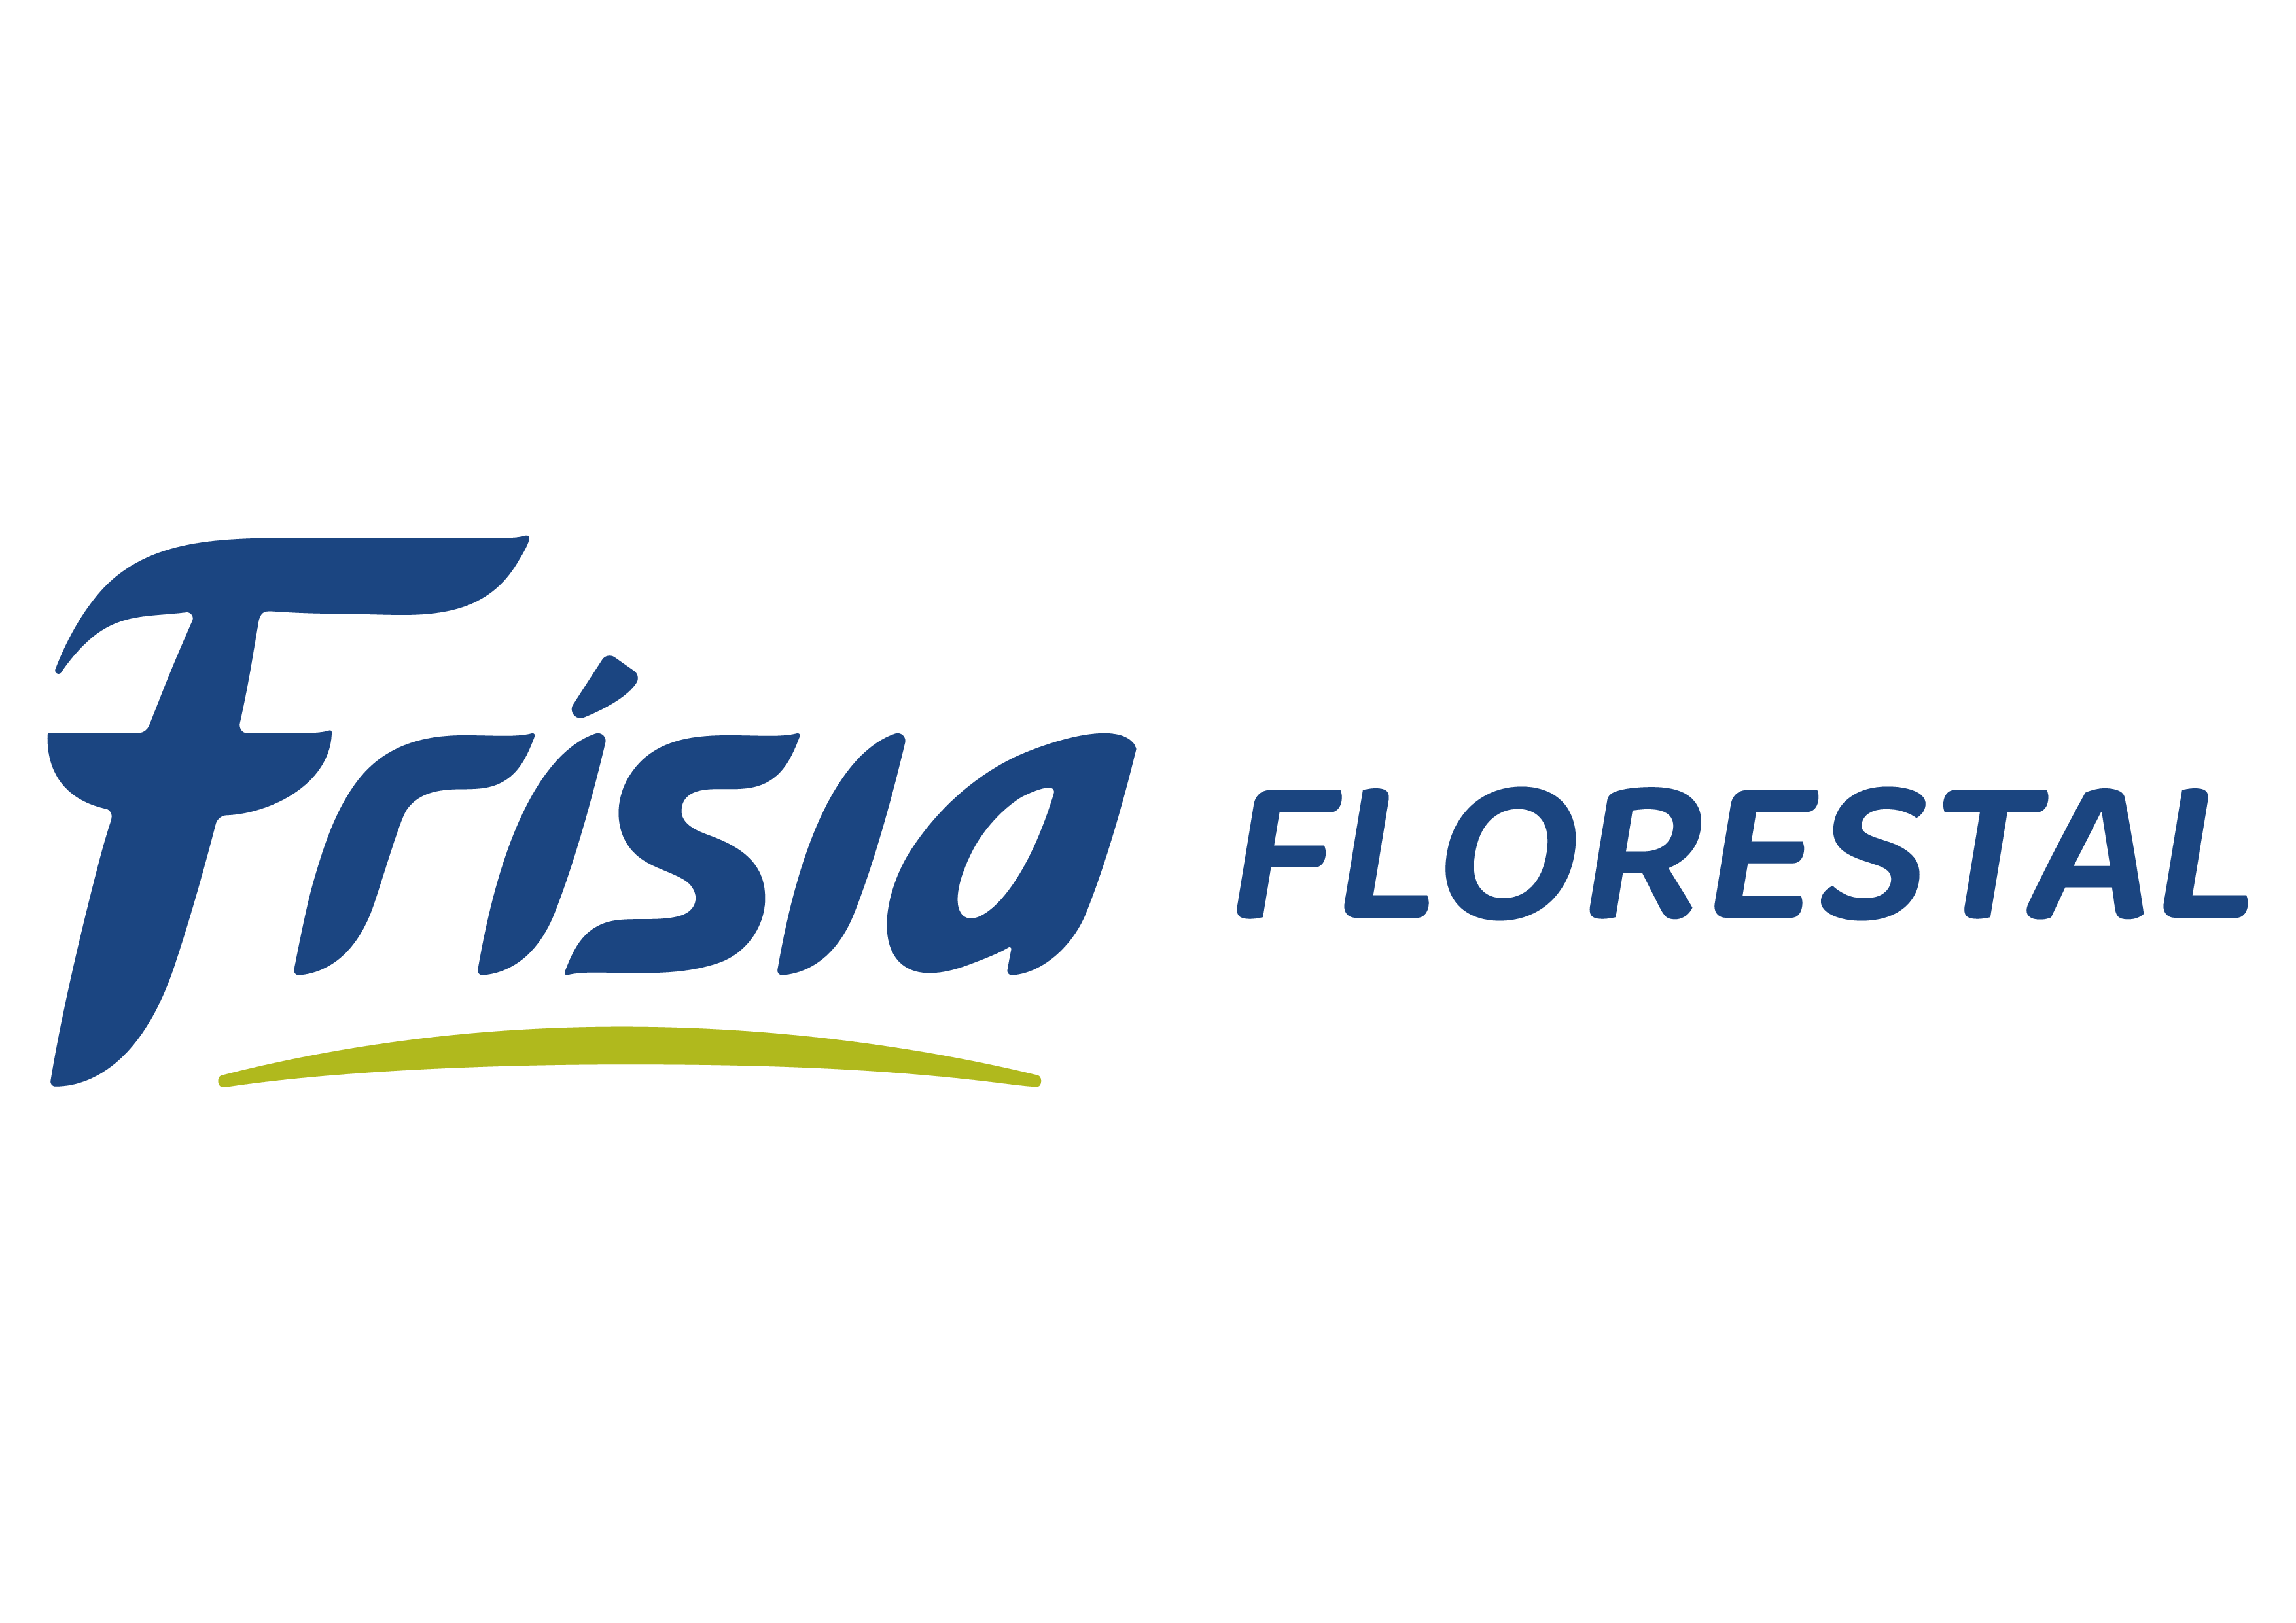 Florestal Frísia